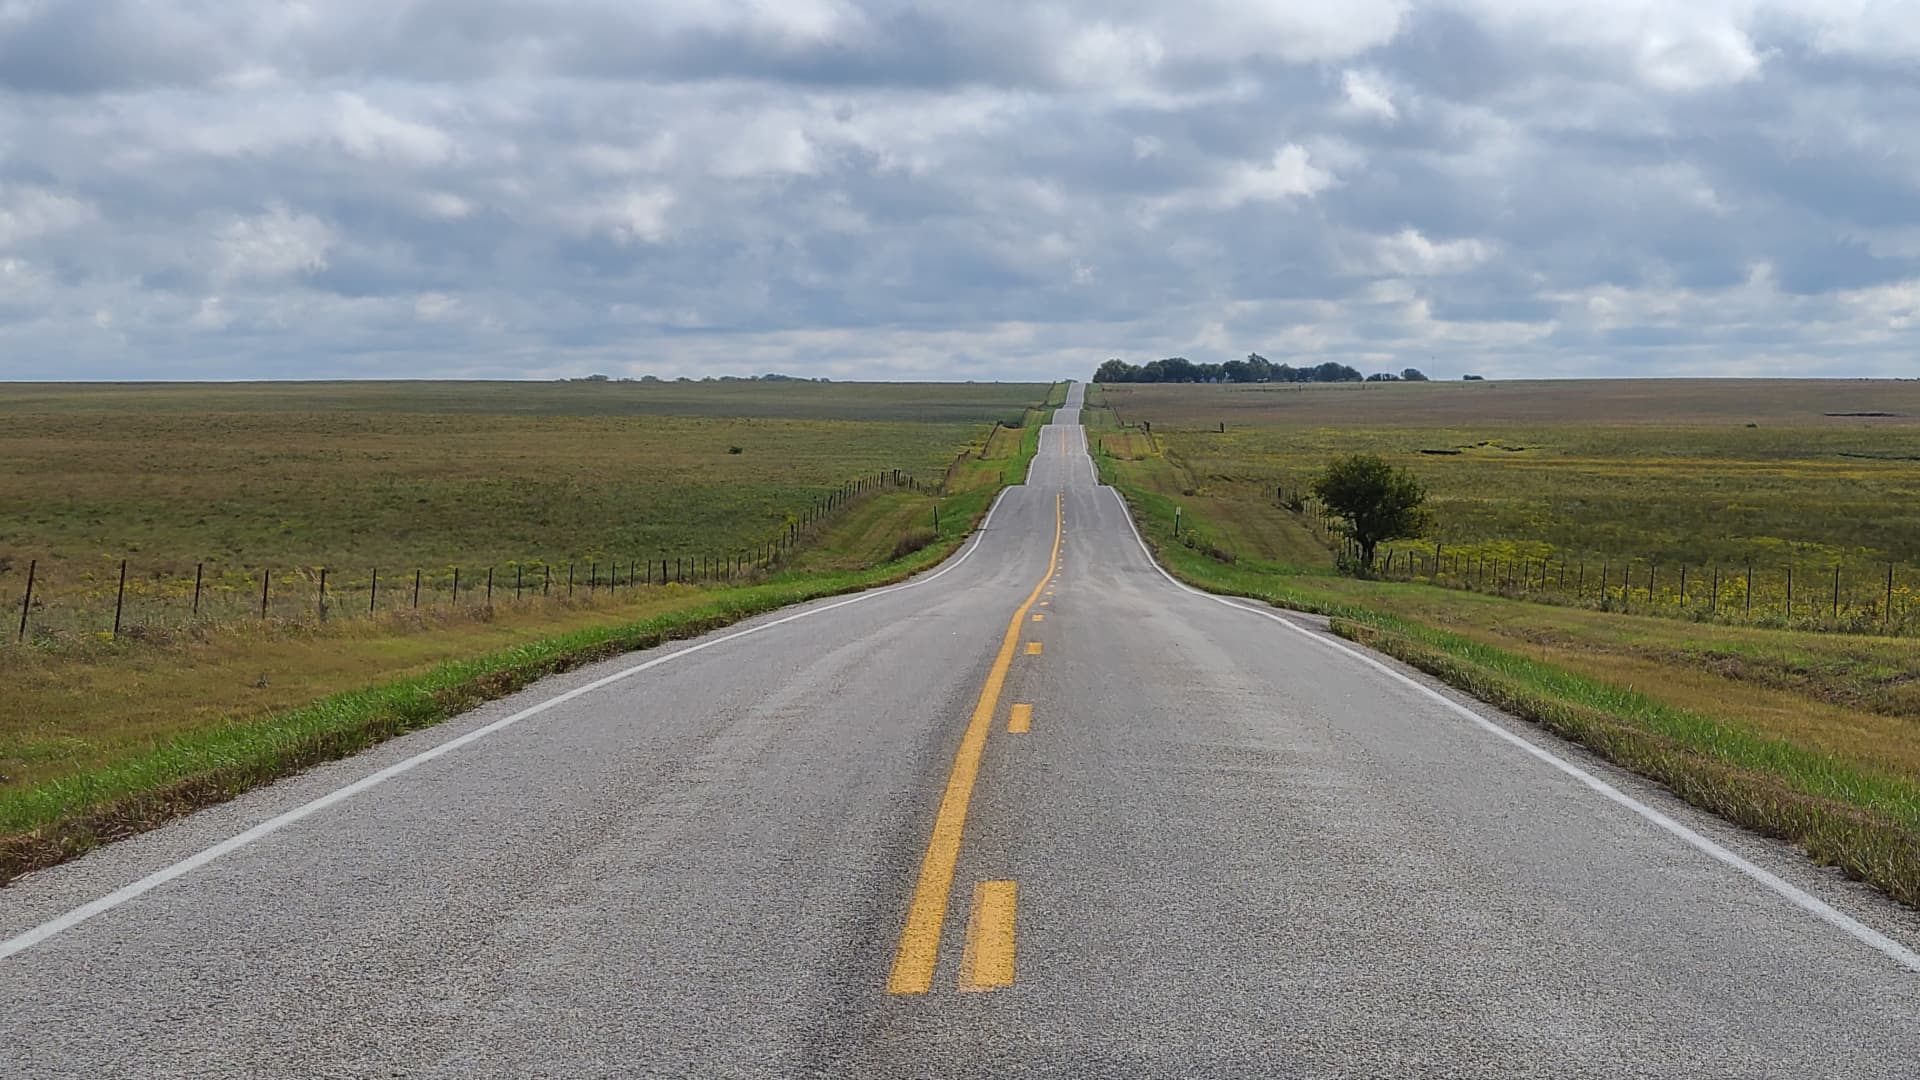 Miles of road in Kansas